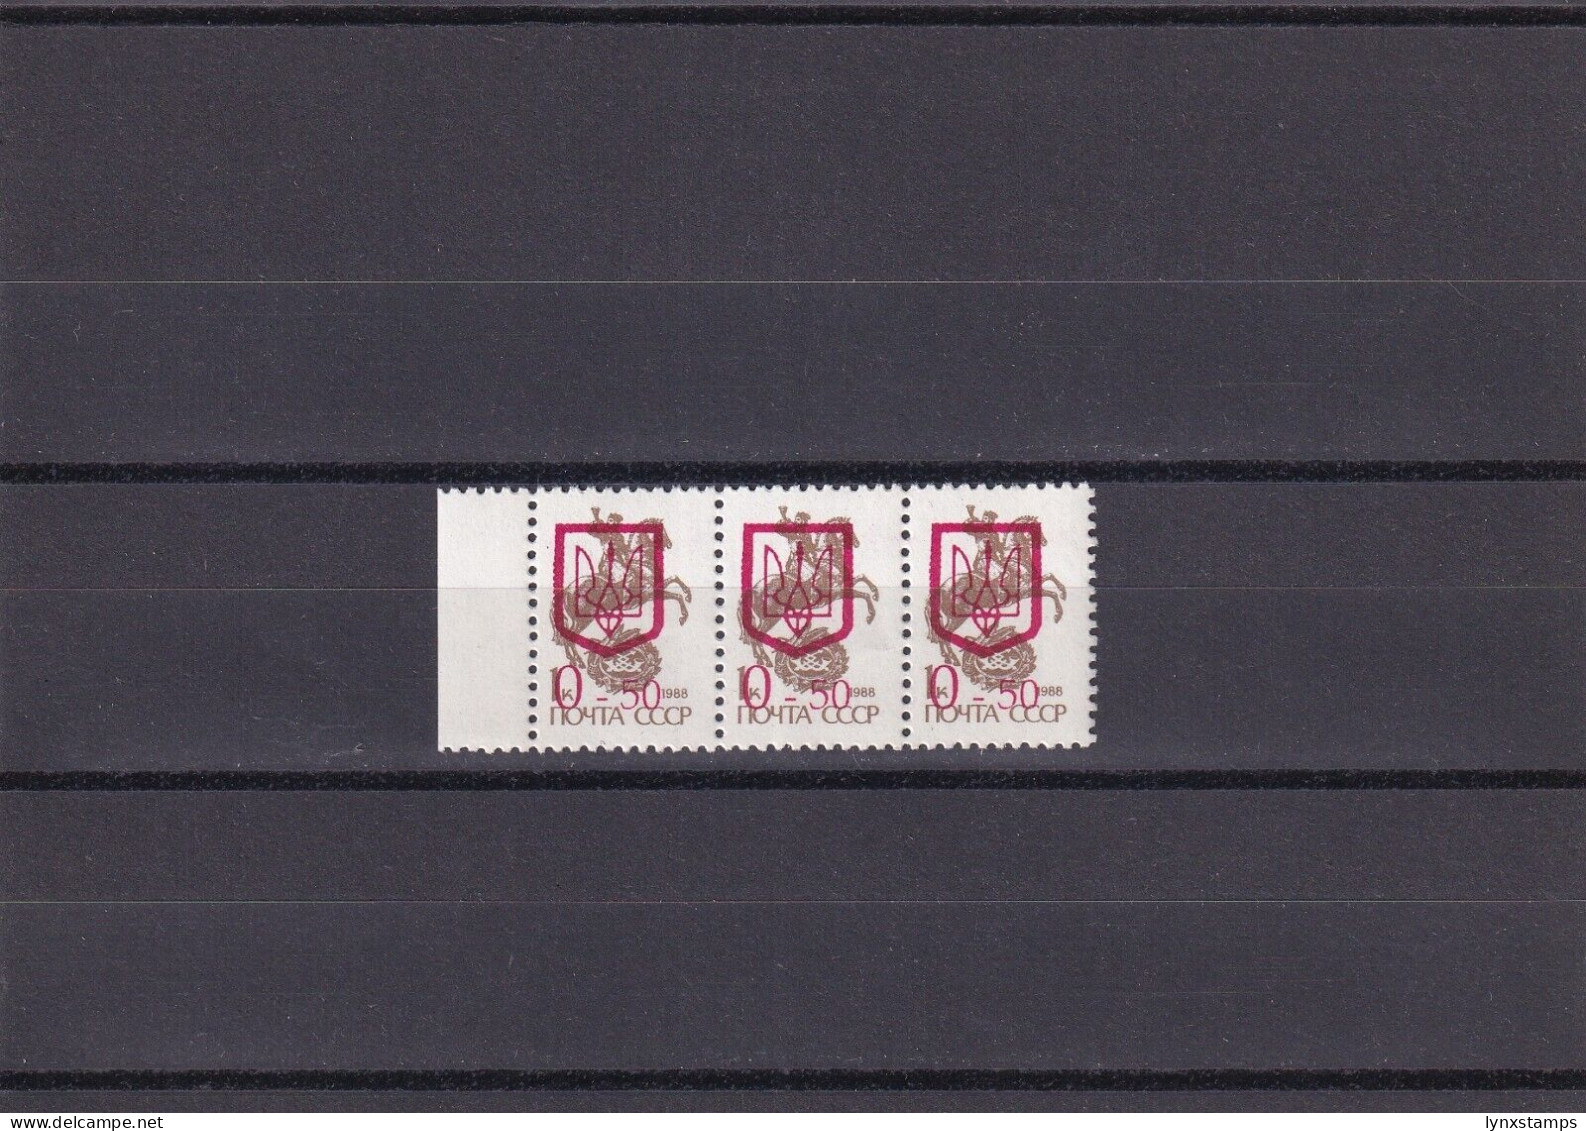 SA05 Ukraine 1992 Trident Overprints On Soviet Union Definitives Mint Stamps - Ucrania